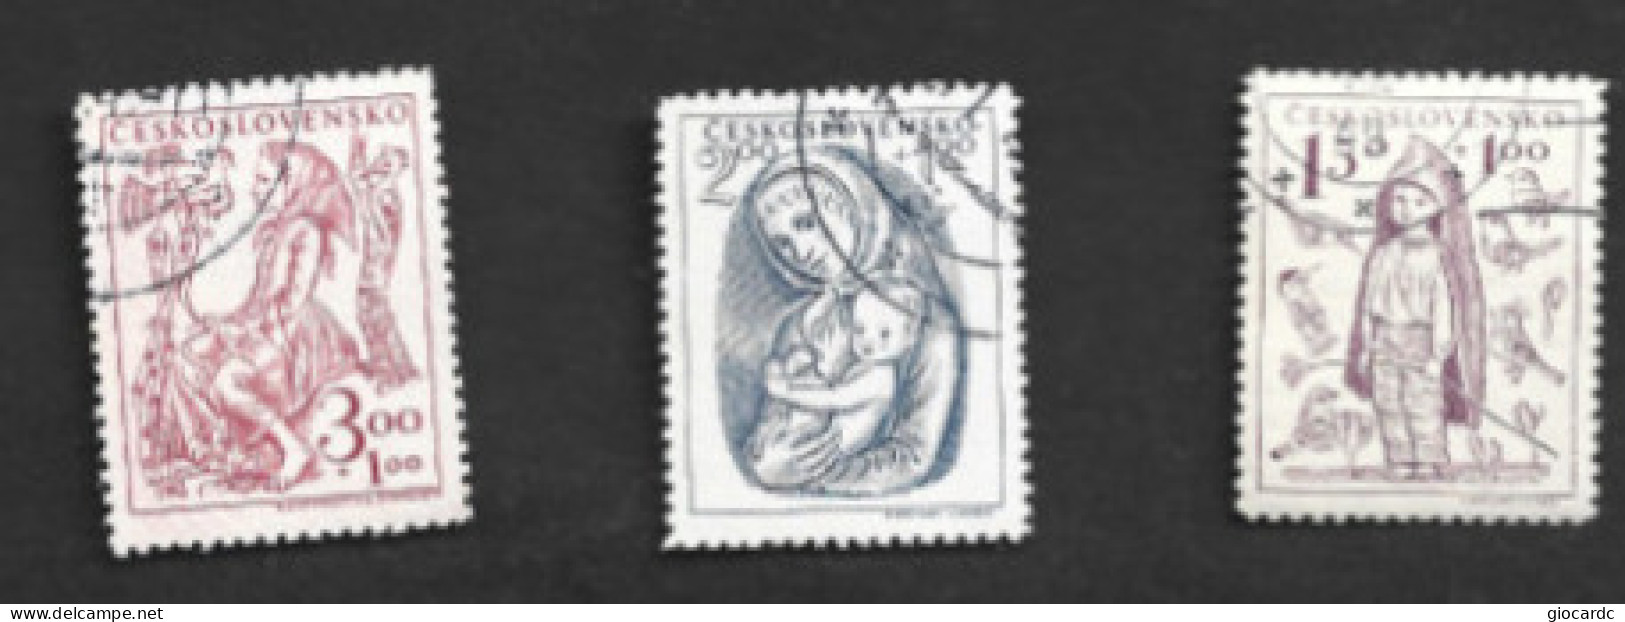 CECOSLOVACCHIA (CZECHOSLOVAKIA) - SG 532.534  - 1948 CHILD WELFARE (COMPLET SET OF 3) - USED - Usados